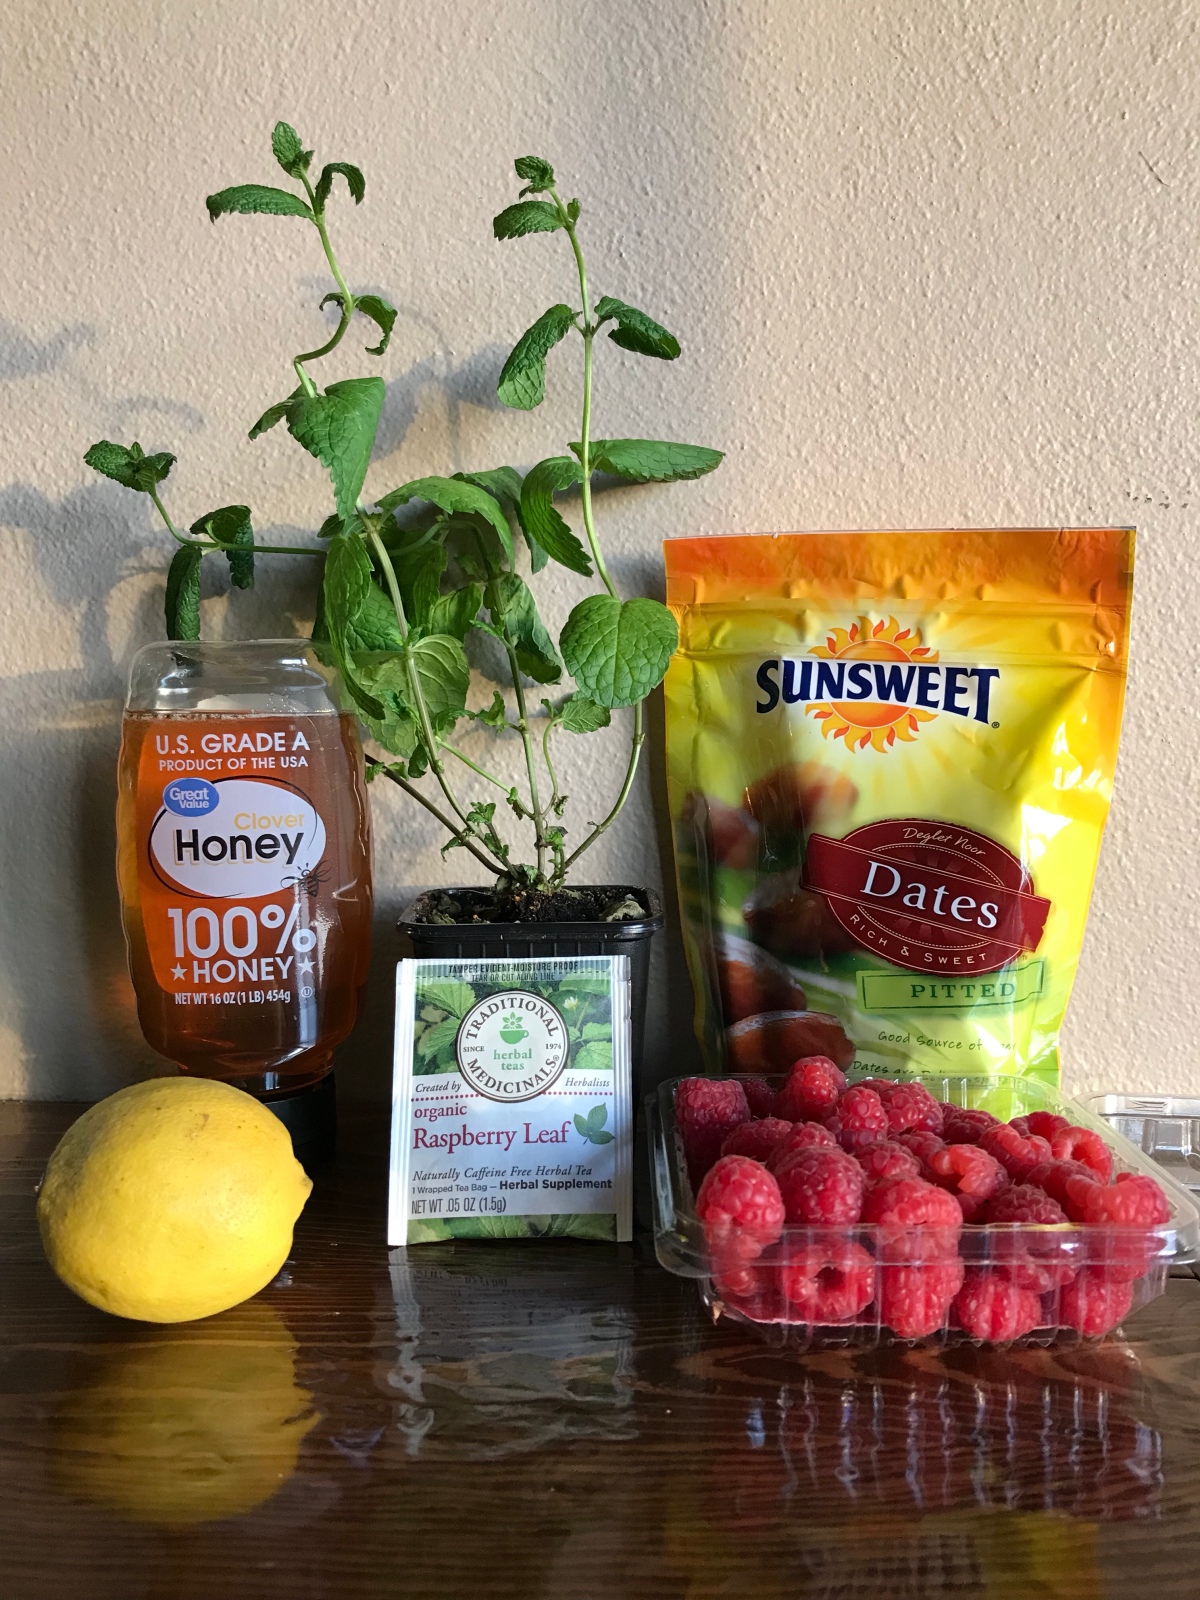 Ingredients in a Third Trimester Mocktail: Dates, Red Raspberry Leaf Tea, Spearmint Leaves, Lemon, Raspberries, And Honey